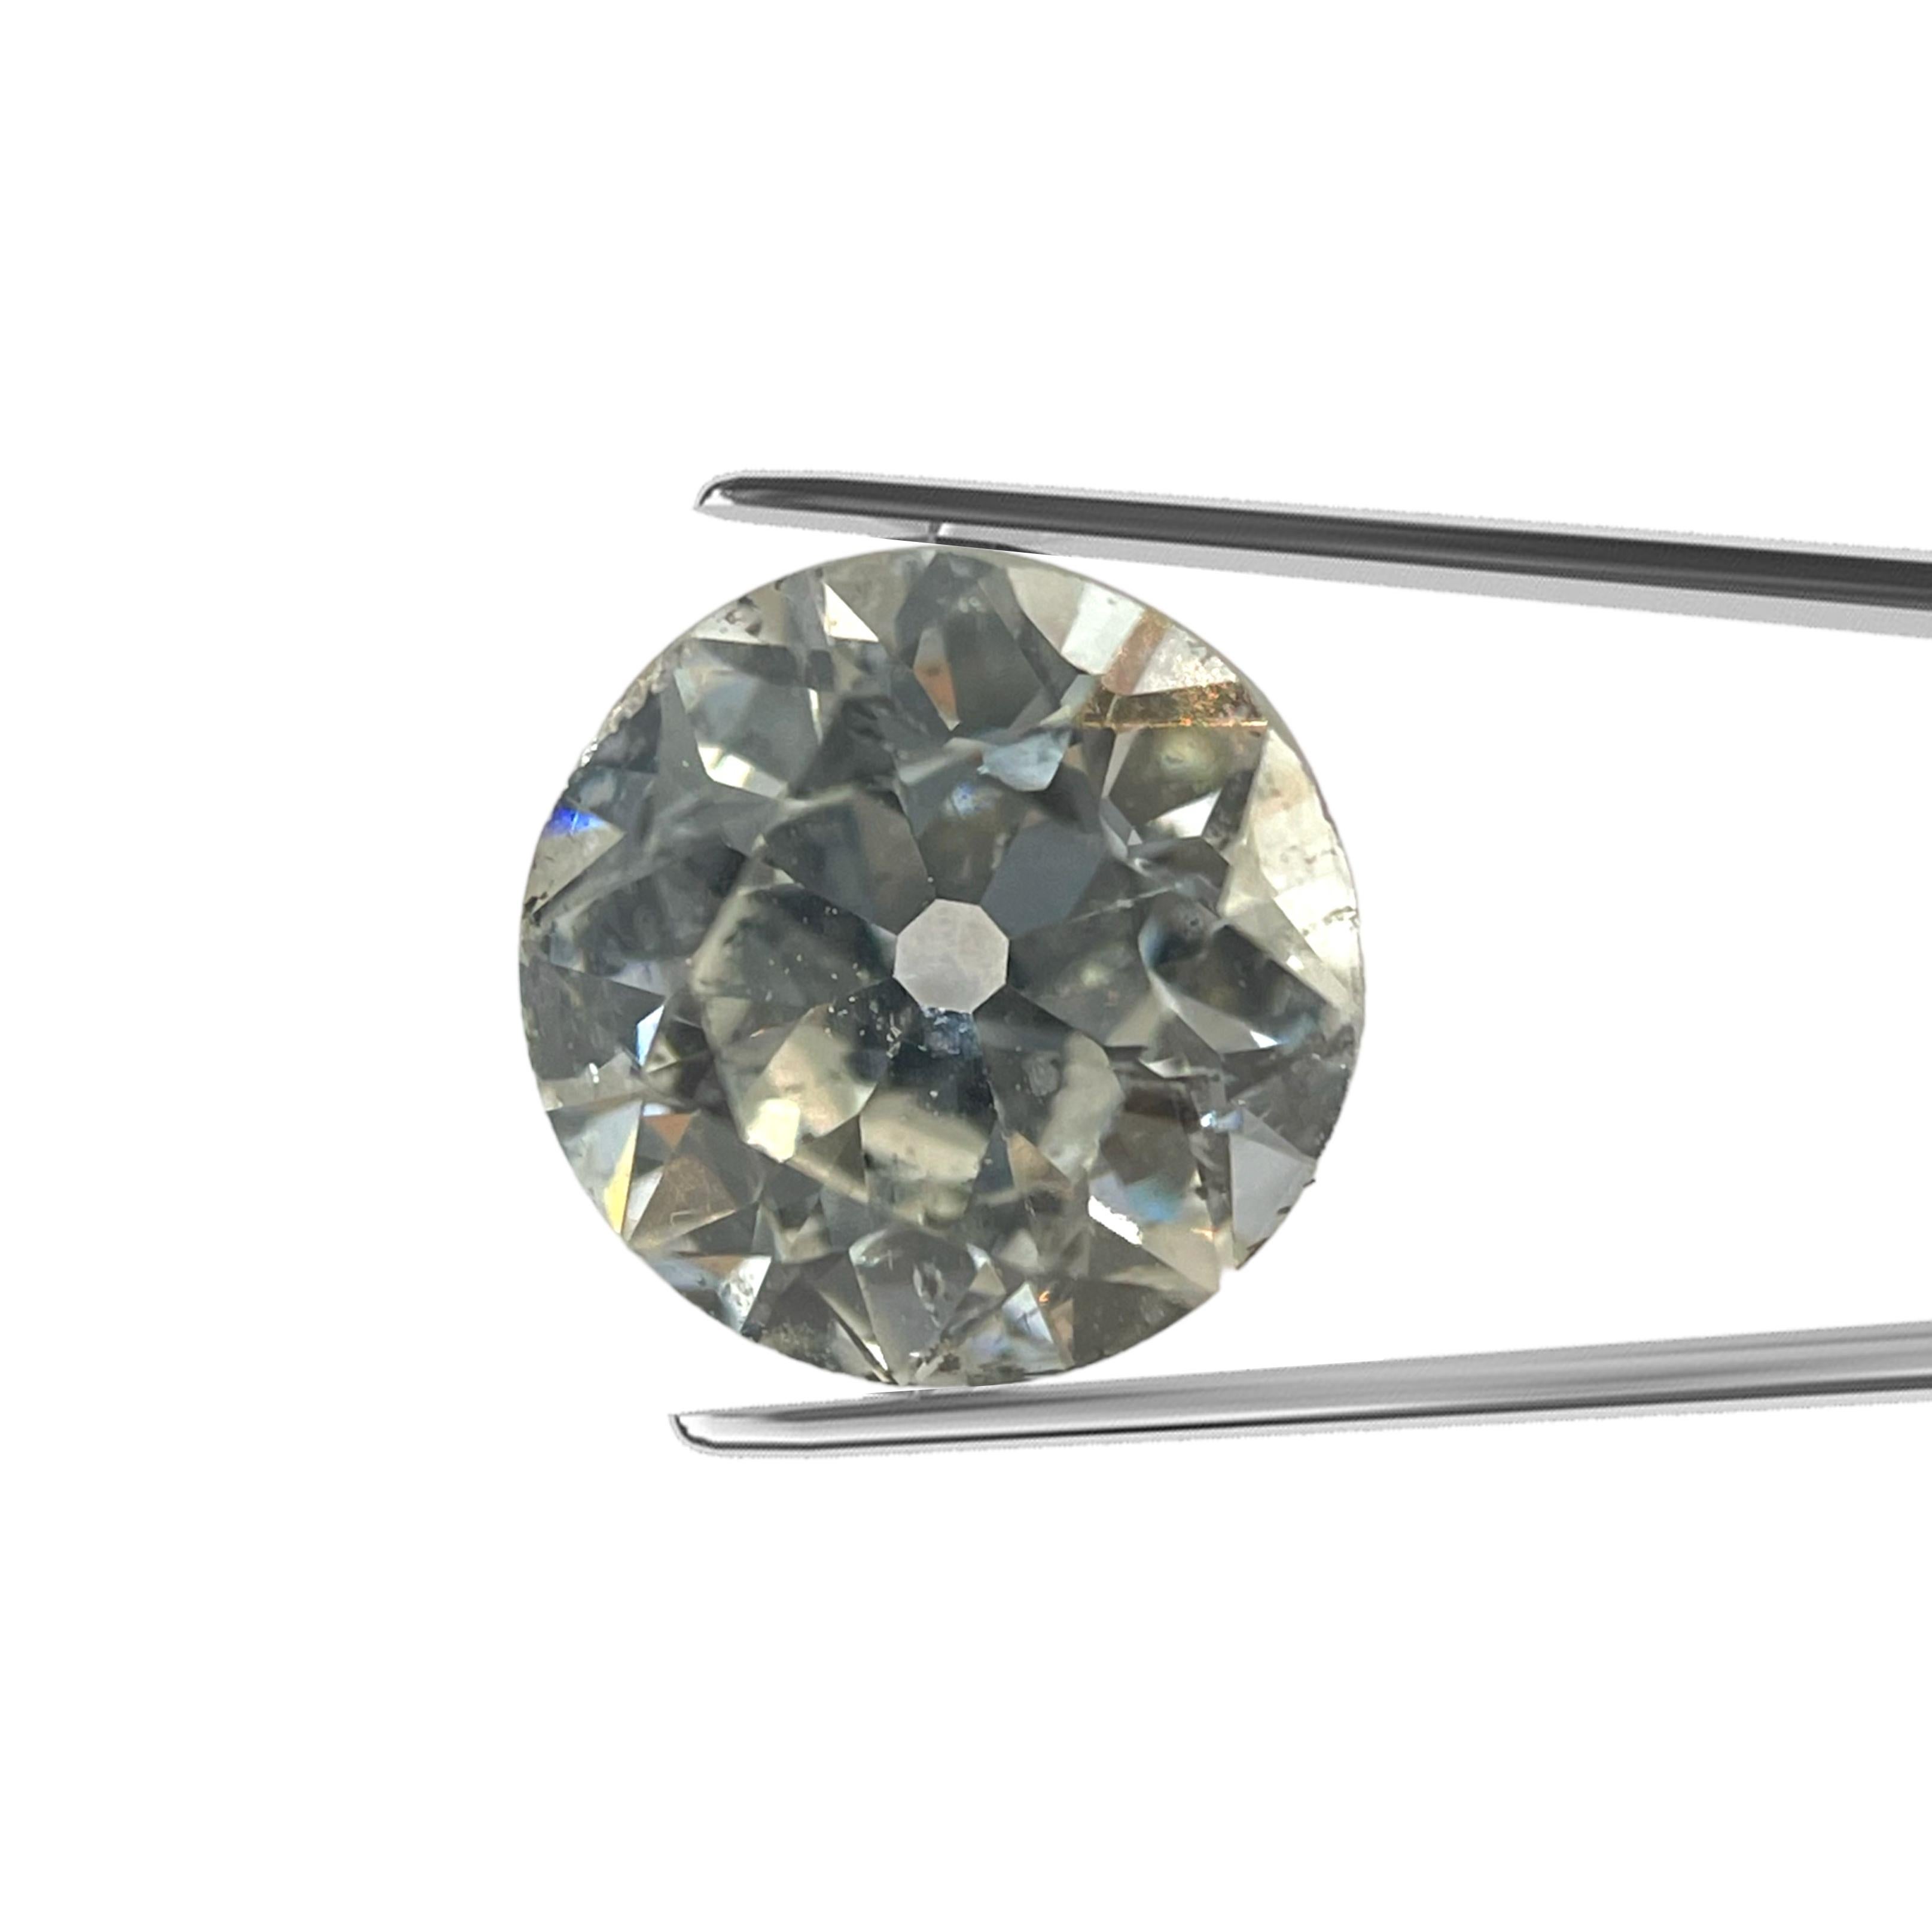 ITEM DESCRIPTION

ID #: NYC56630
Stone Shape: CIRCULAR BRILLIANT
Diamond Weight: 0.71ct
Clarity:	I1
Color:	H
Cut:	Excellent
Measurements: 5.72 - 5.79 x 3.15 mm
Depth %:	54.8%
Table %:	55%
Symmetry: Fair
Polish: Good
Fluorescence: Faint
Certifying